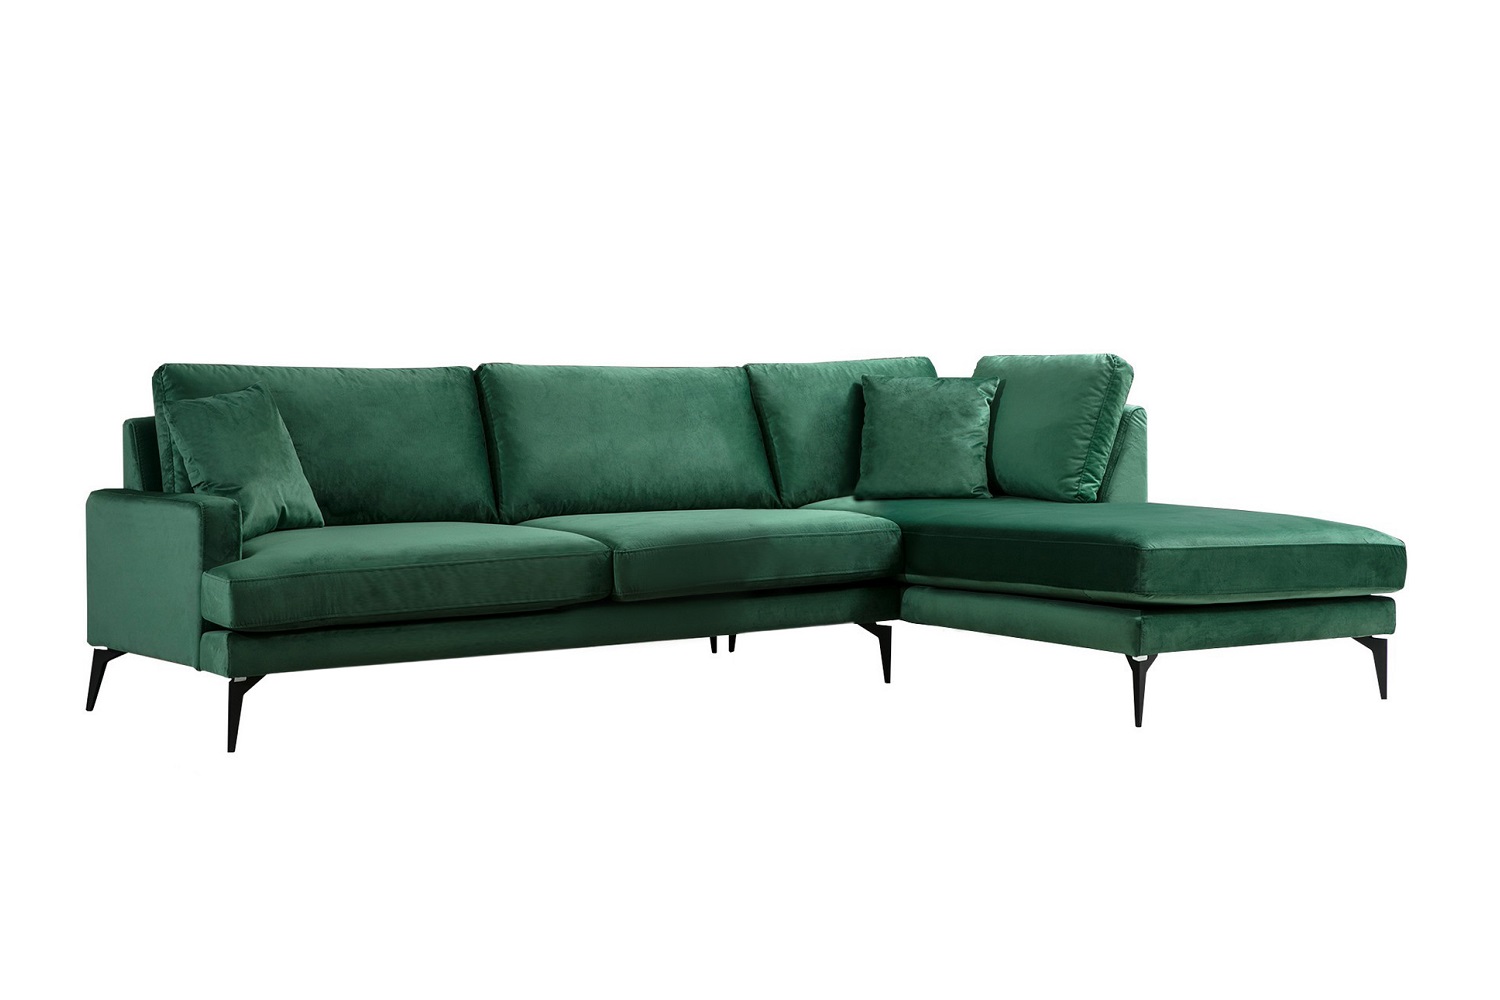 dizajnova-rohova-sedacka-fenicia-283-cm-zelena-prava-3